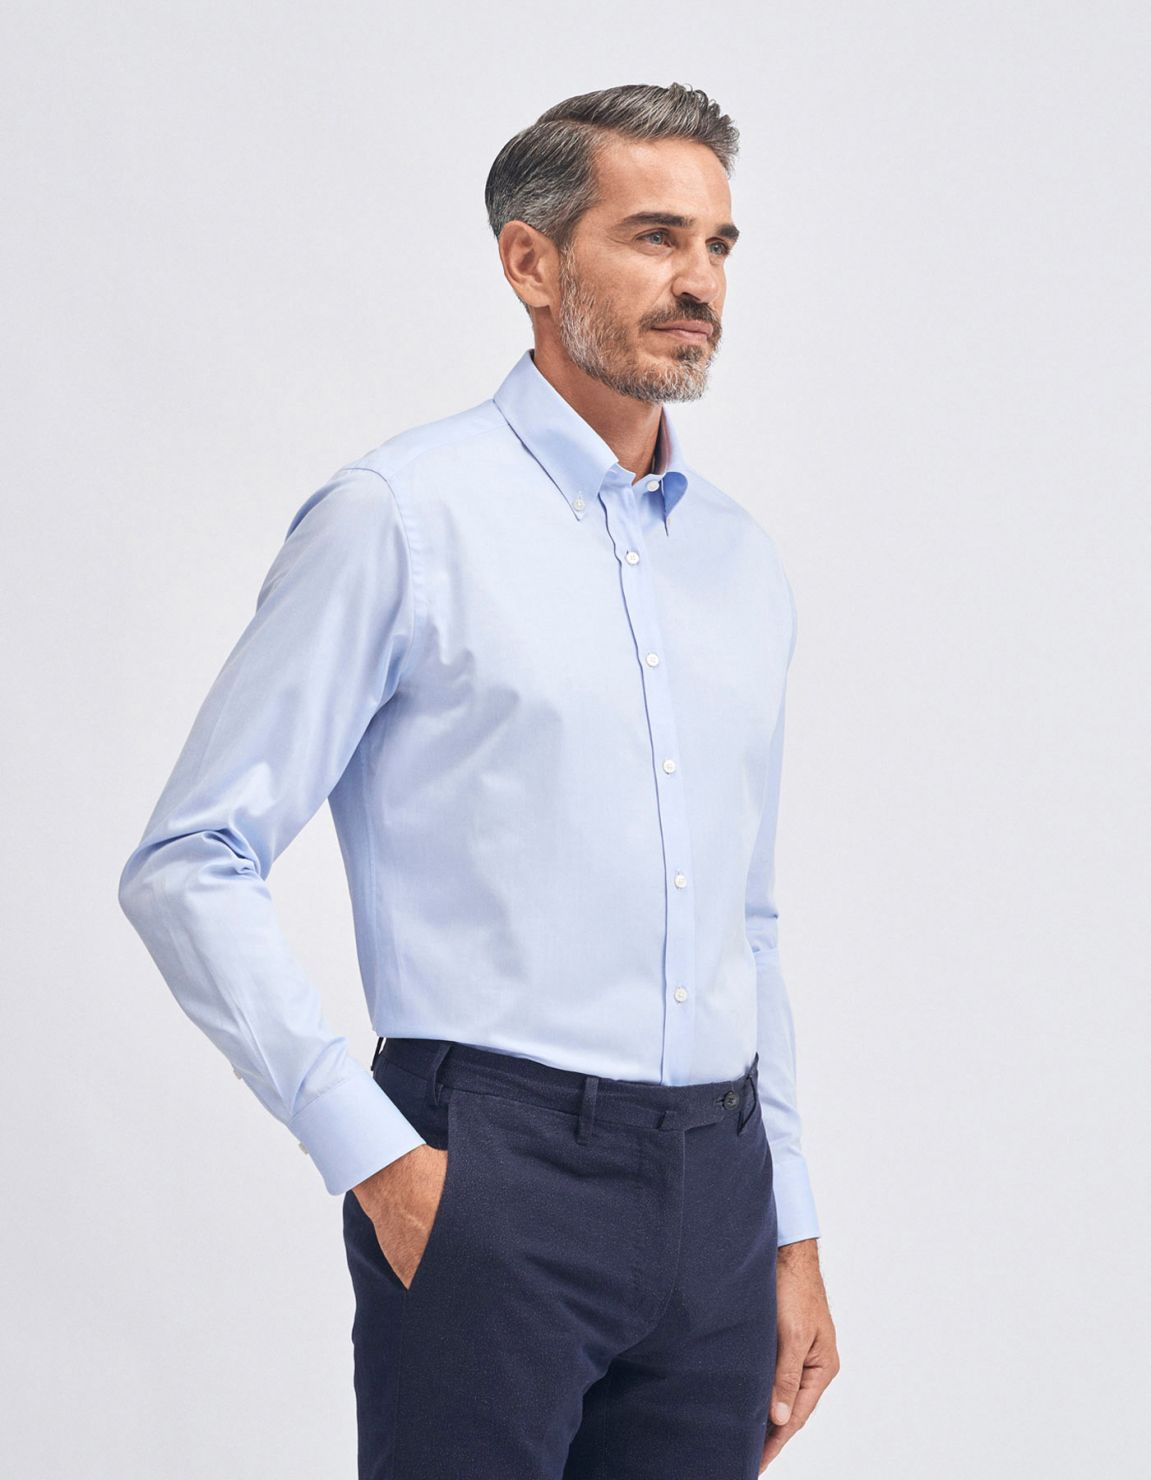 Shirt Collar button down Light Blue Pin point Tailor Custom Fit 1